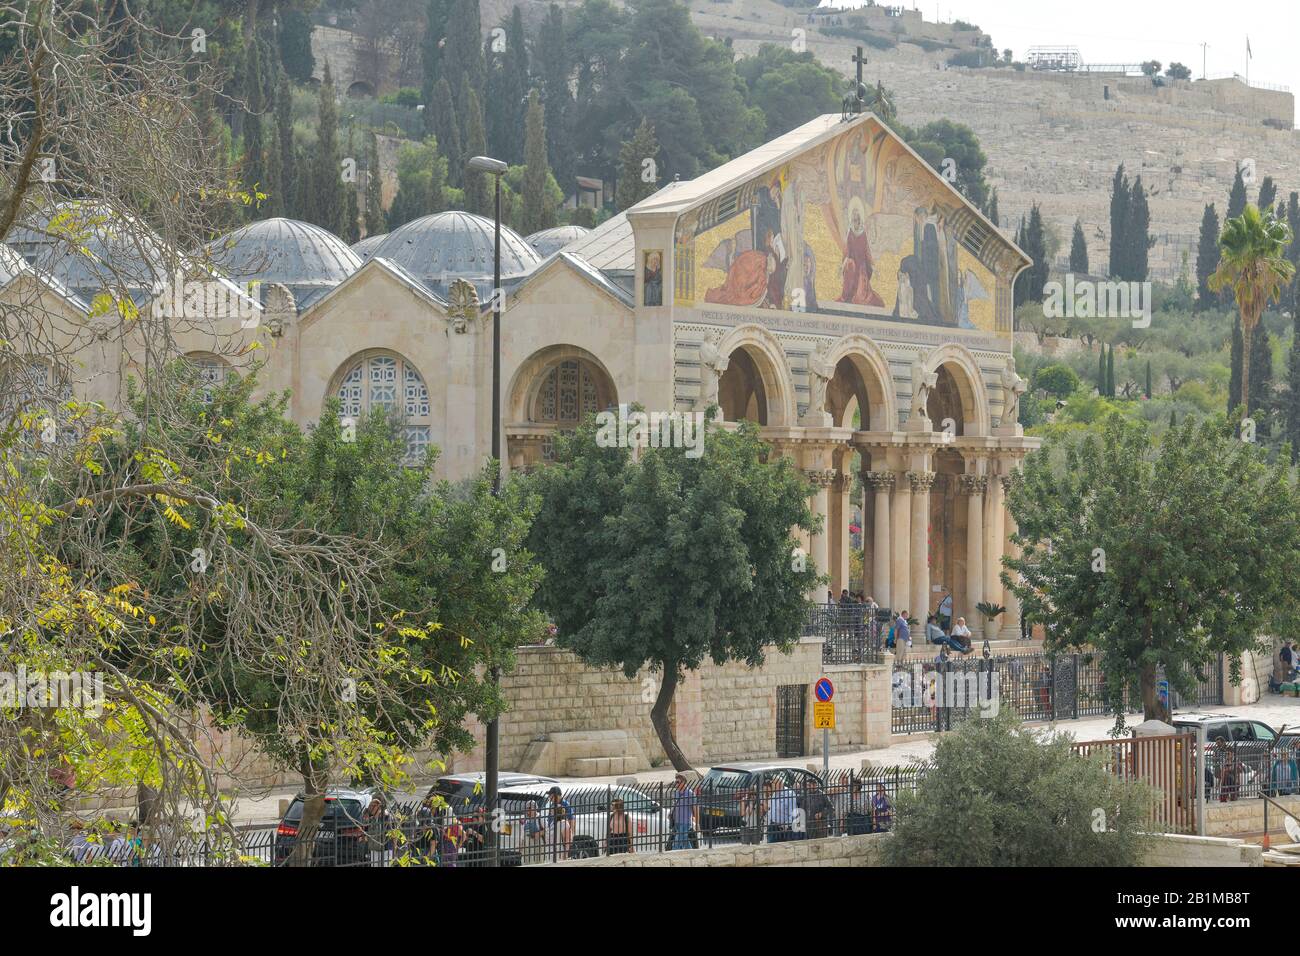 Kirche aller Nationen, Ölberg, Jerusalem, Israel Stock Photo